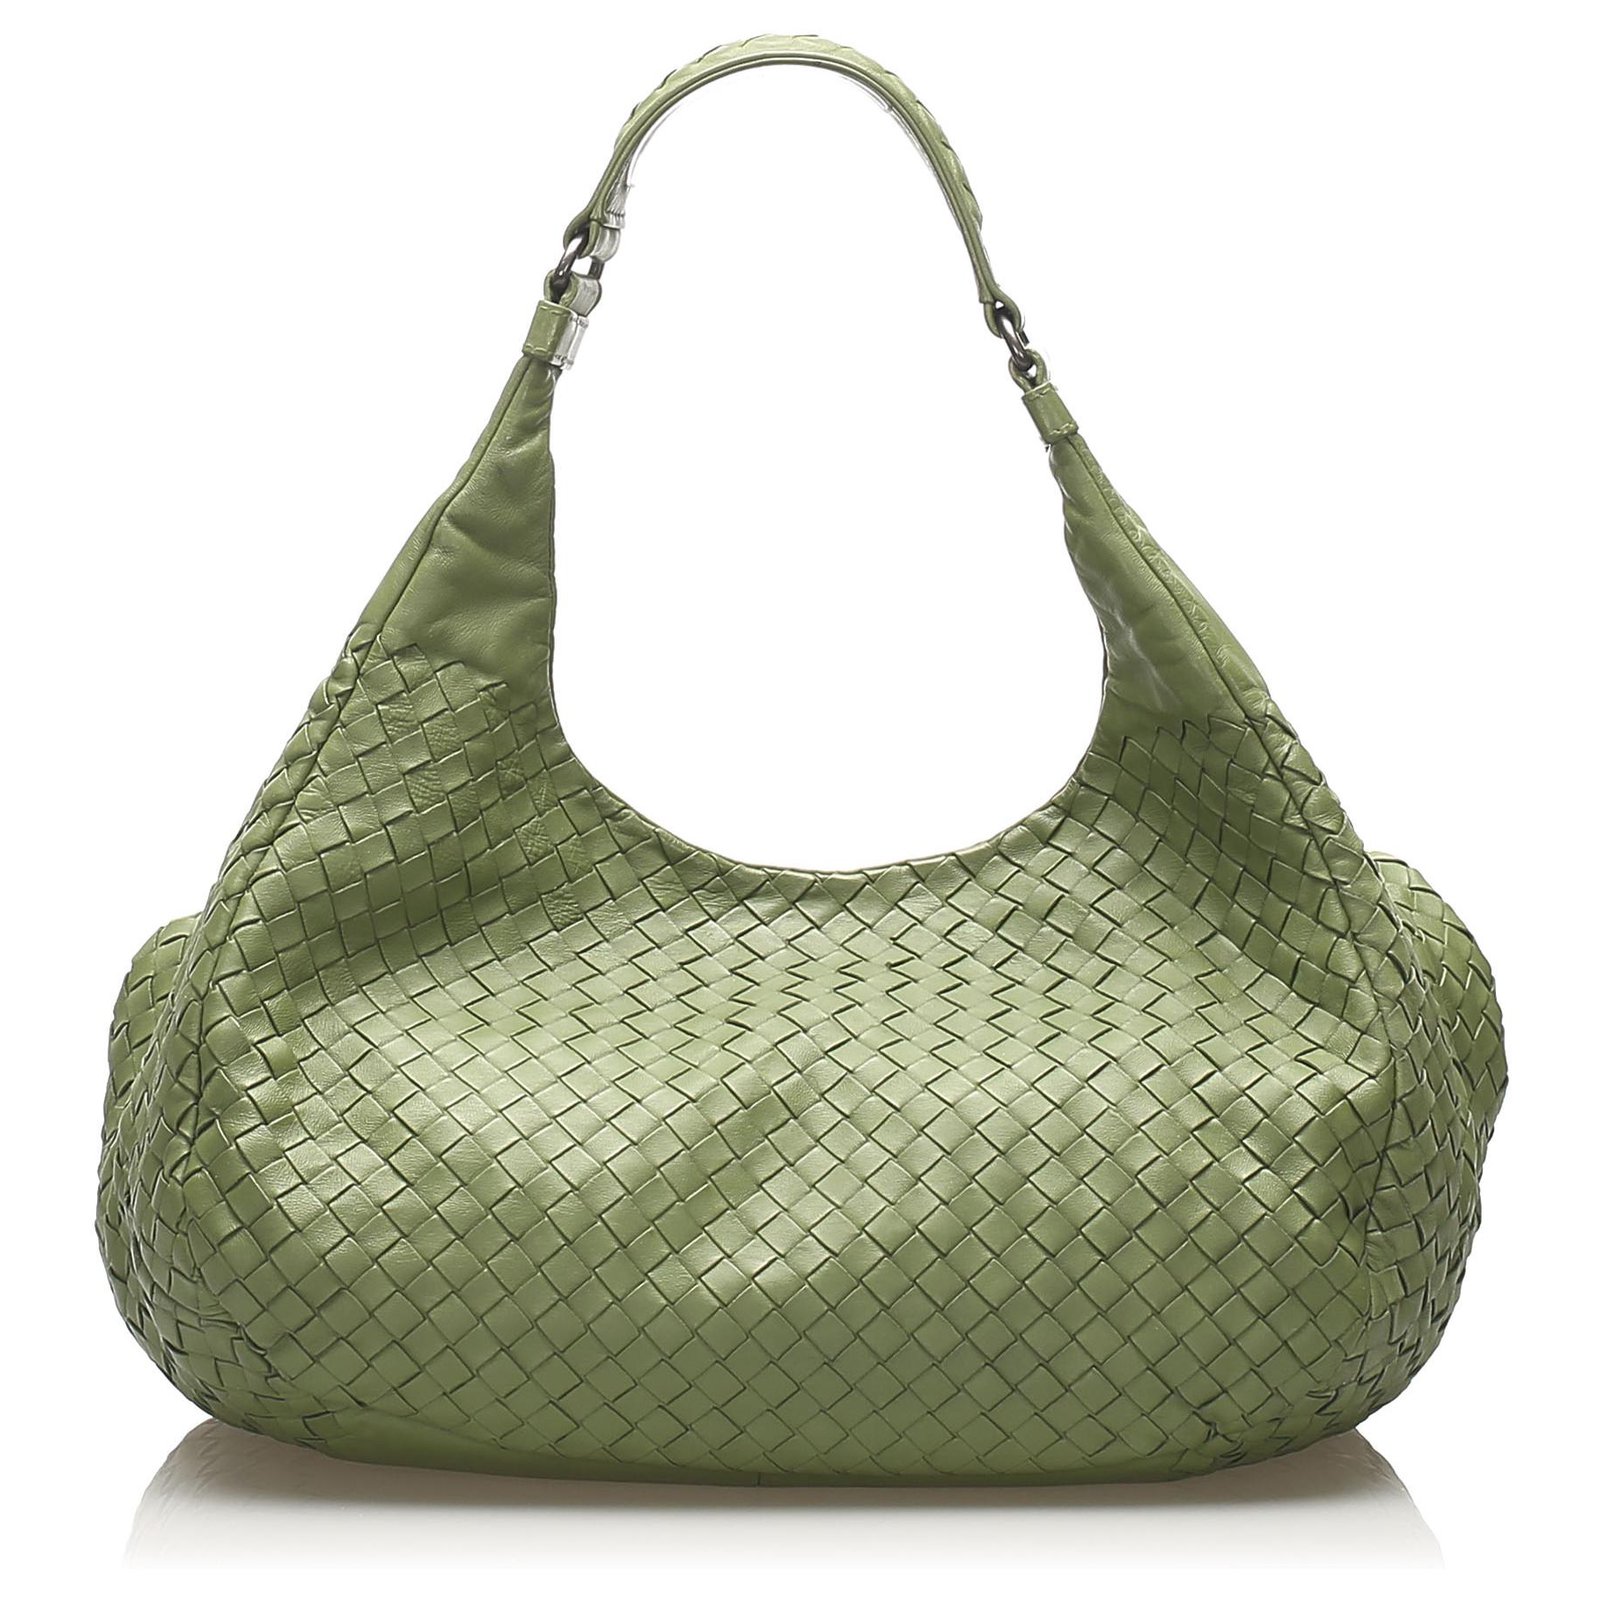 Bottega Veneta Intrecciato Hobo Bag in beautiful green. Roomy, chic,  stunning.love this bag!